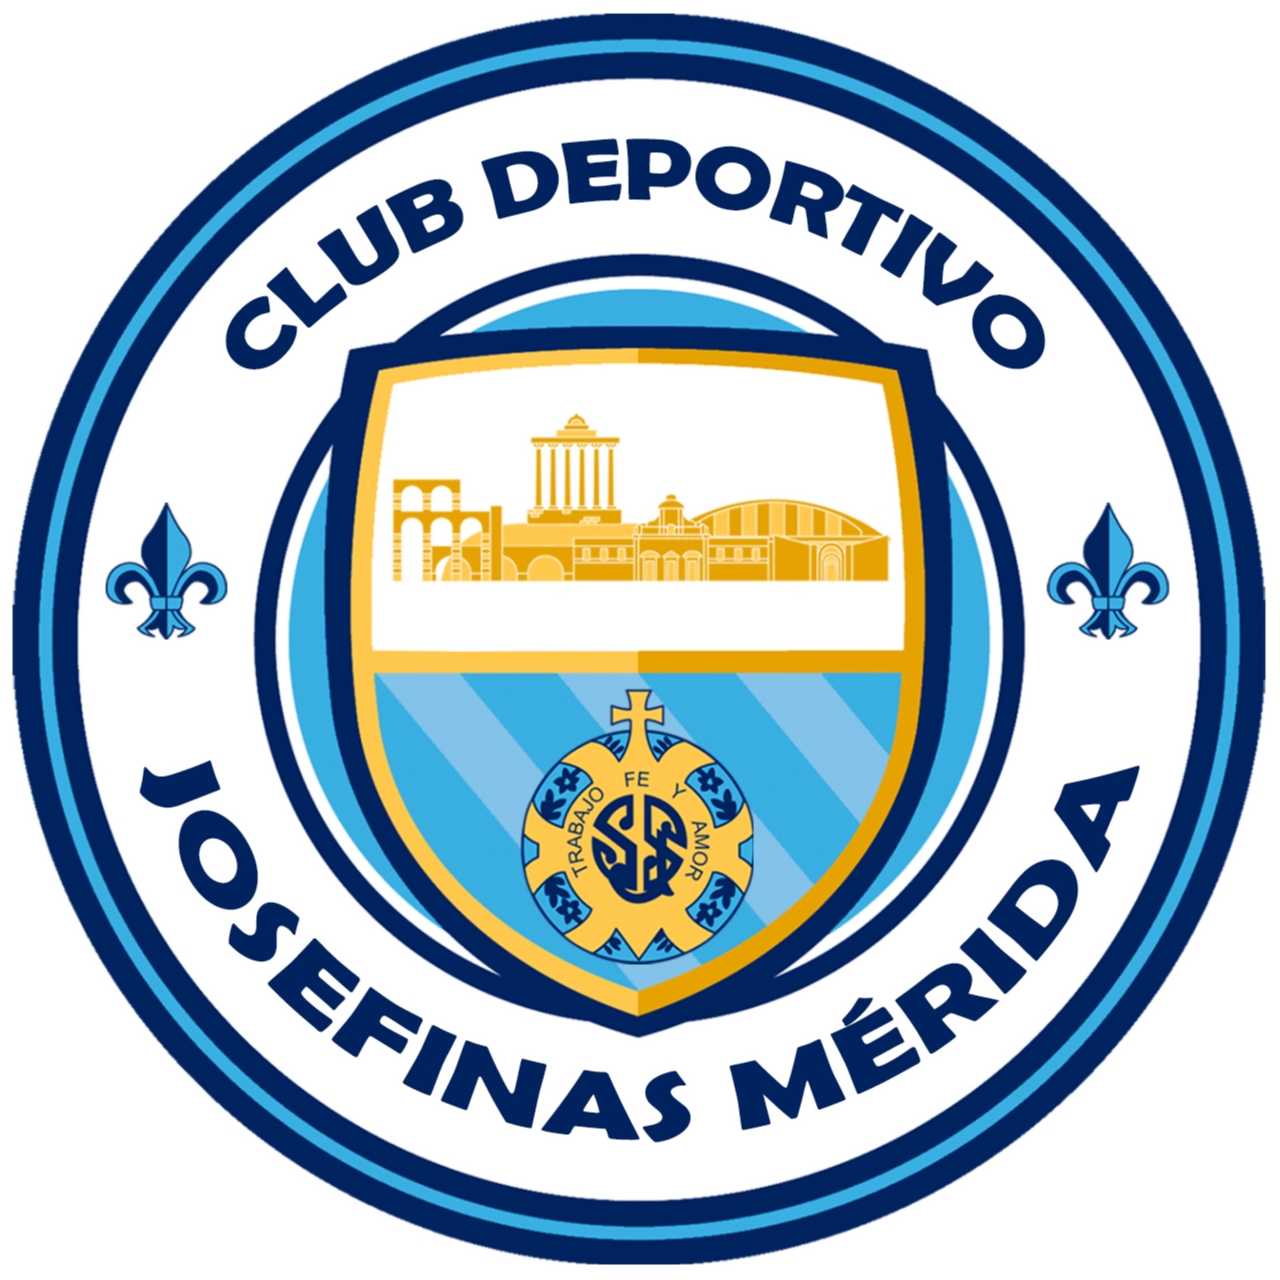 CLUB DEPORTIVO JOSEFINAS MÃRIDA 